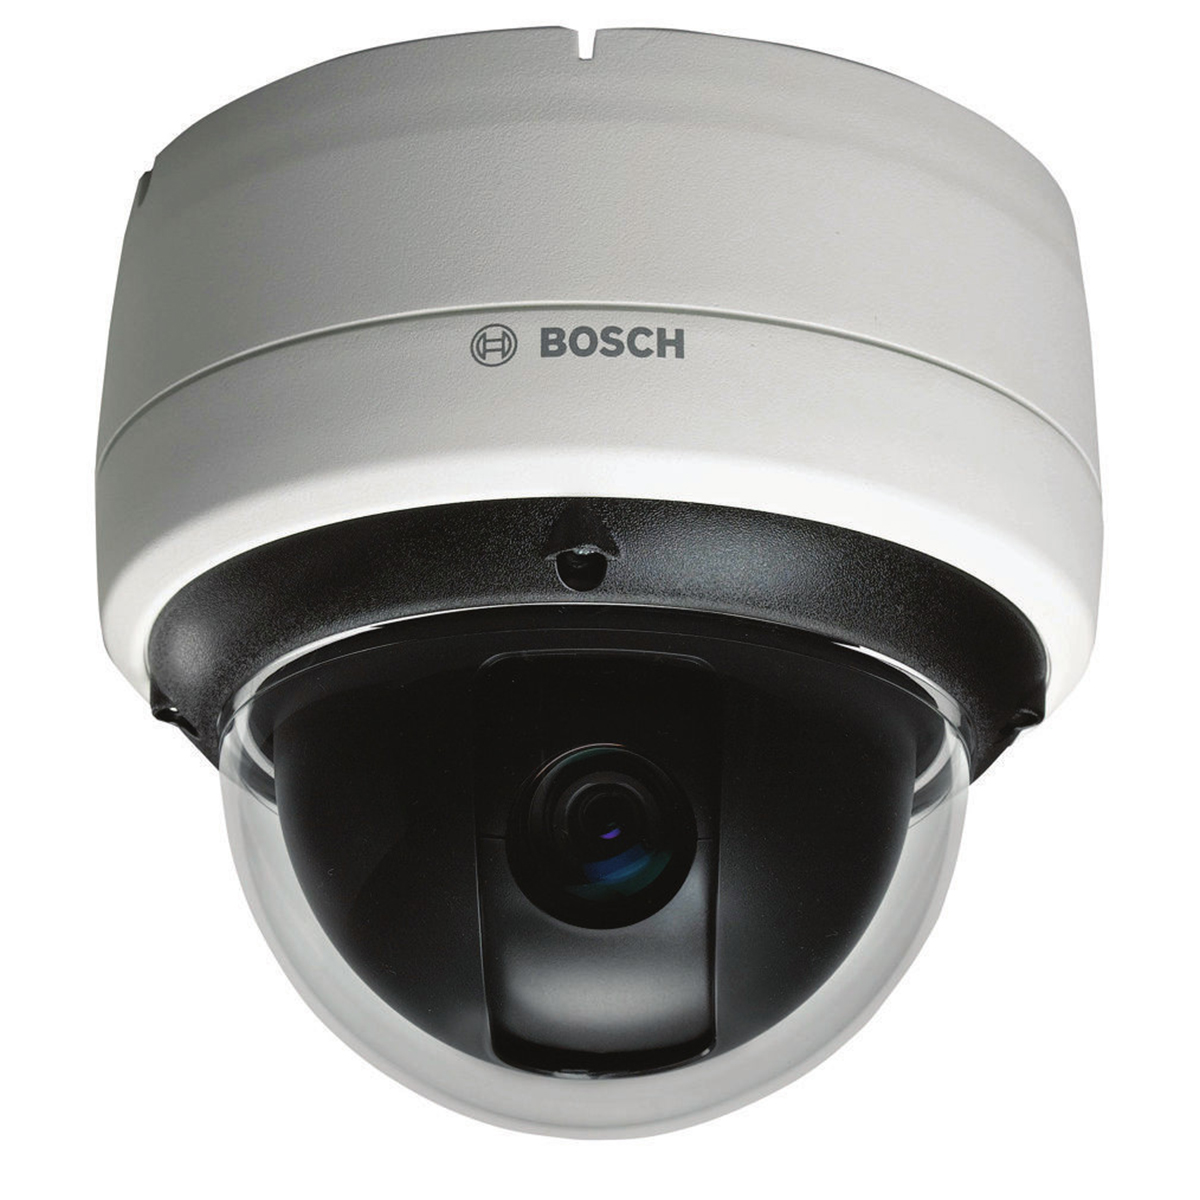 Bosch HD Dome Camera Model VCD-811-ICT